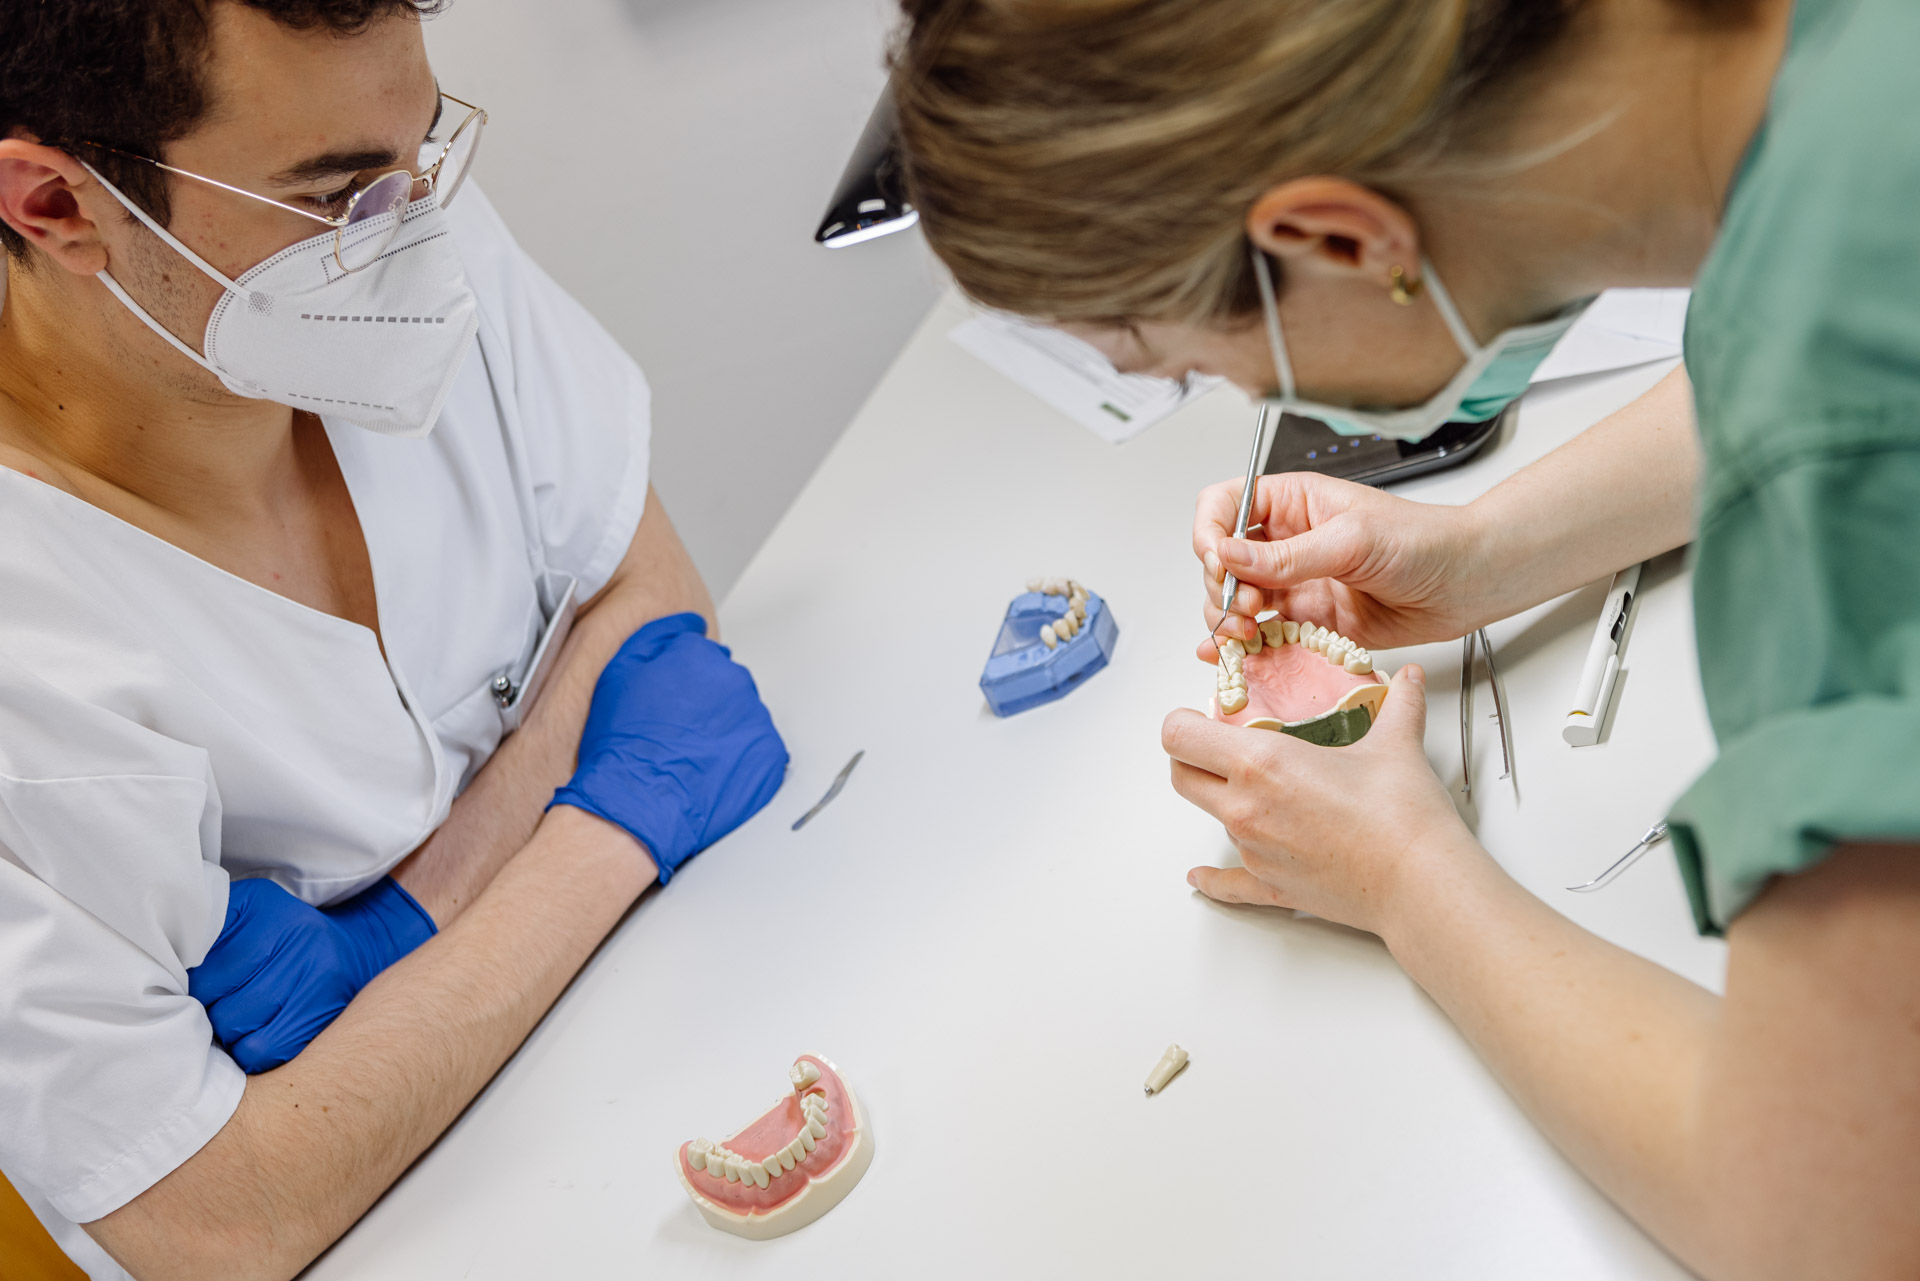 Professor examines tooth model